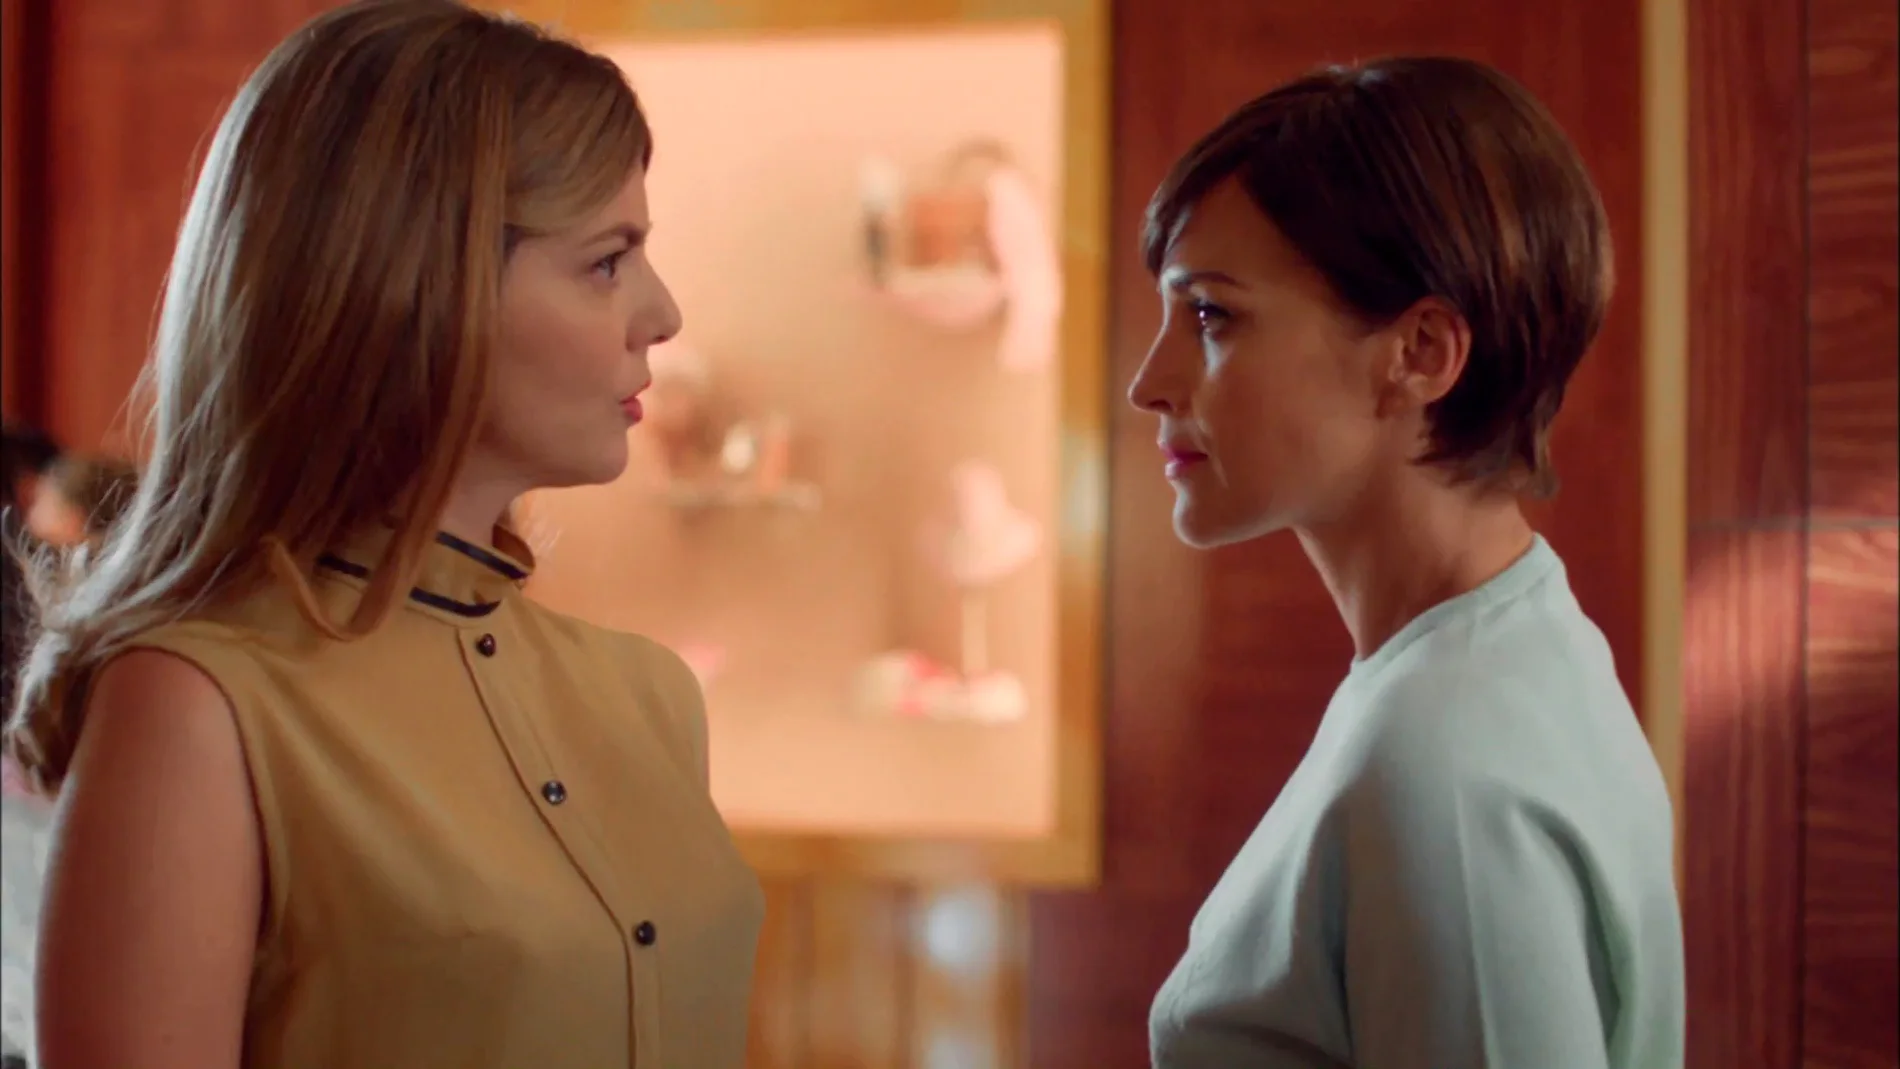 Ana no se fía de la ayuda desinteresada de Cristina: "Aléjate de mi"